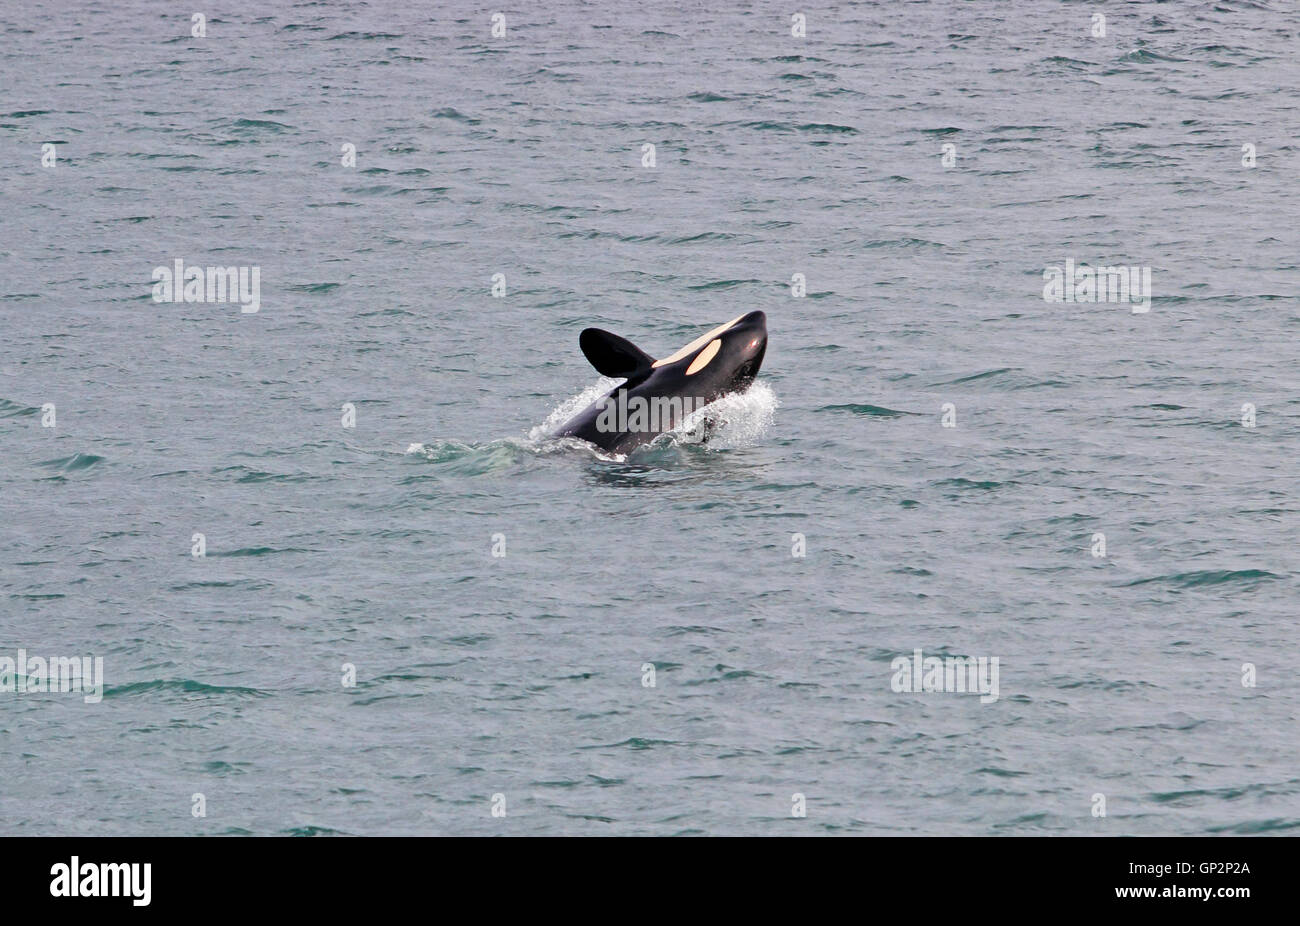 Breaching Orca Whales 'Killer Whales' in Sitka Sound Sitka Southeast Alaska USA Stock Photo